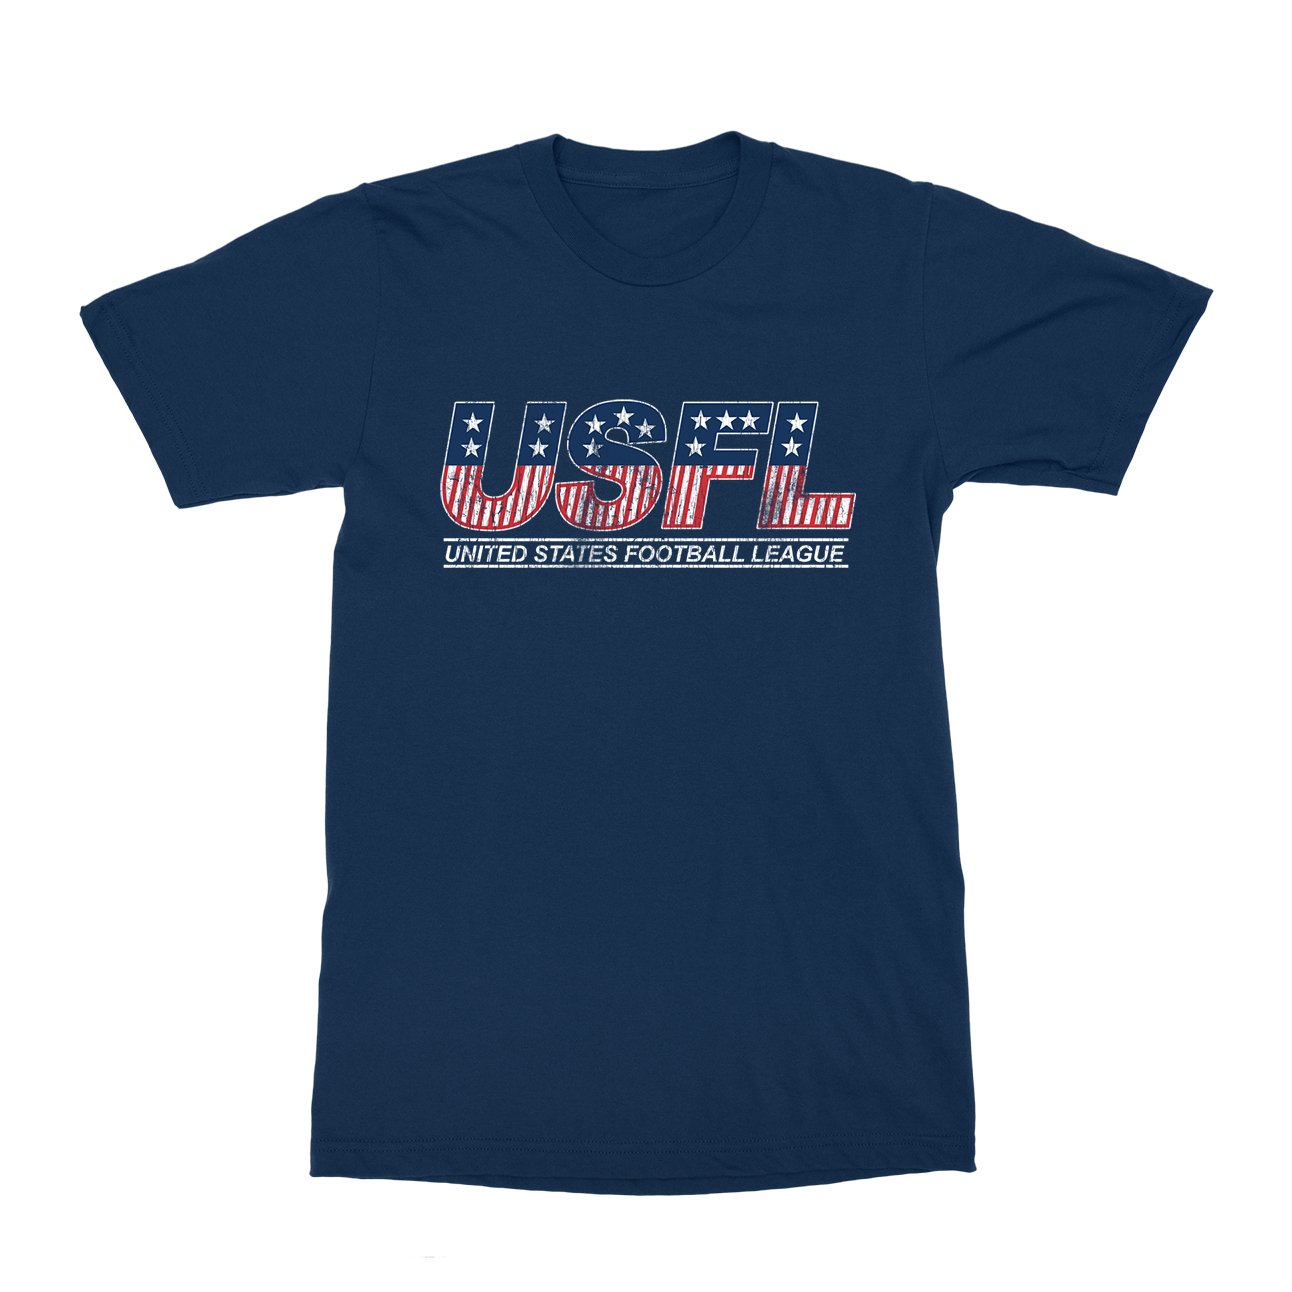 United States Football League T-Shirt - Black Cat MFG -